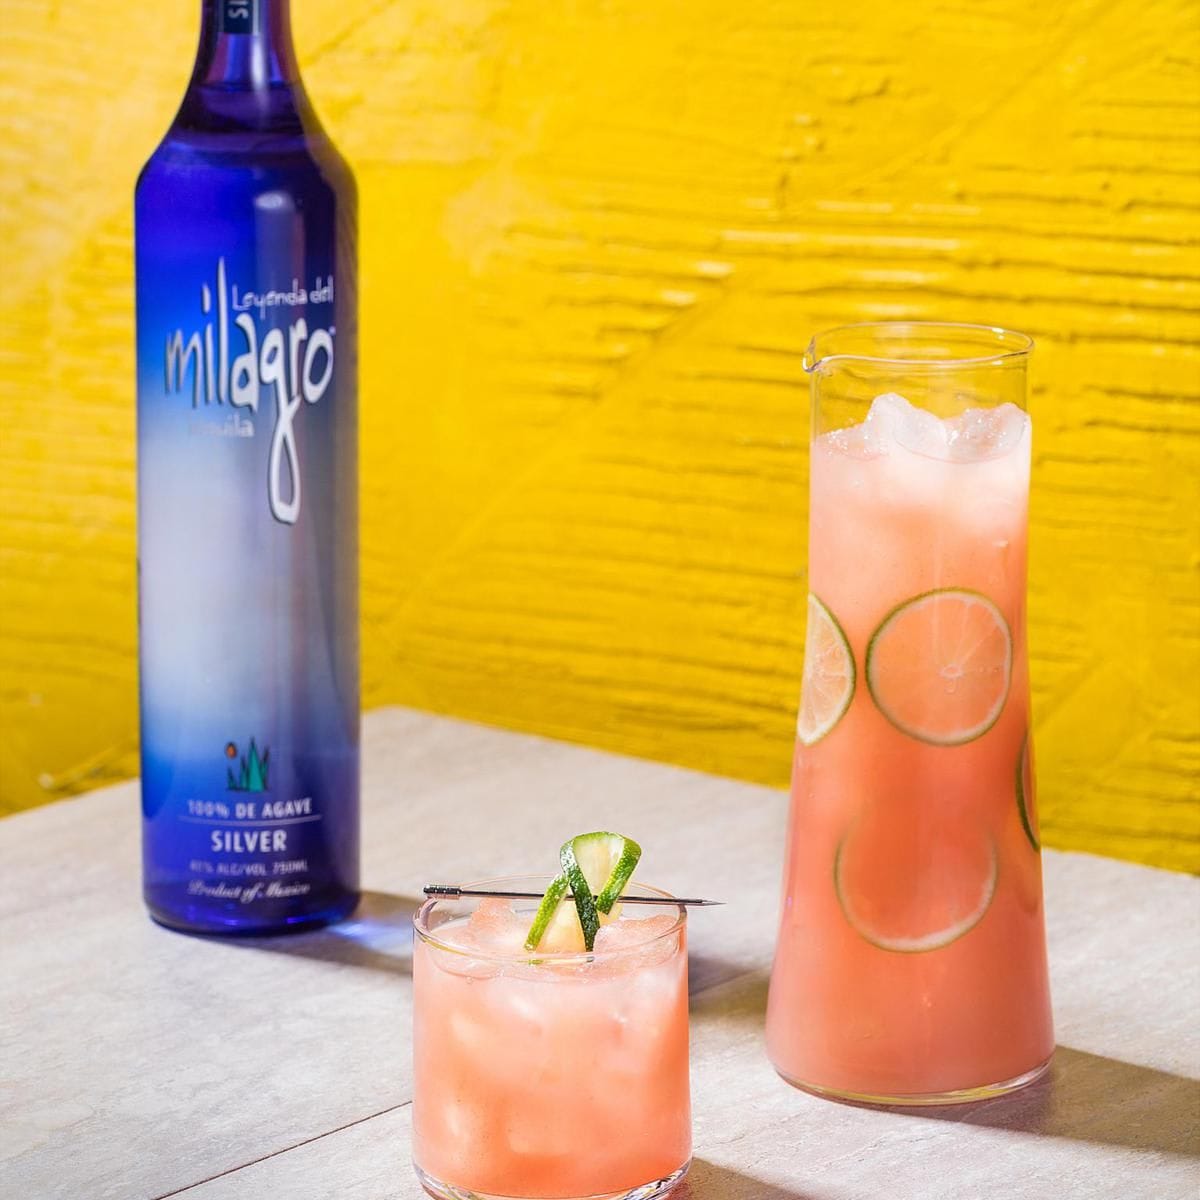 The Celebracion by Jaime Salas, Milagro Tequila Brand Ambassador